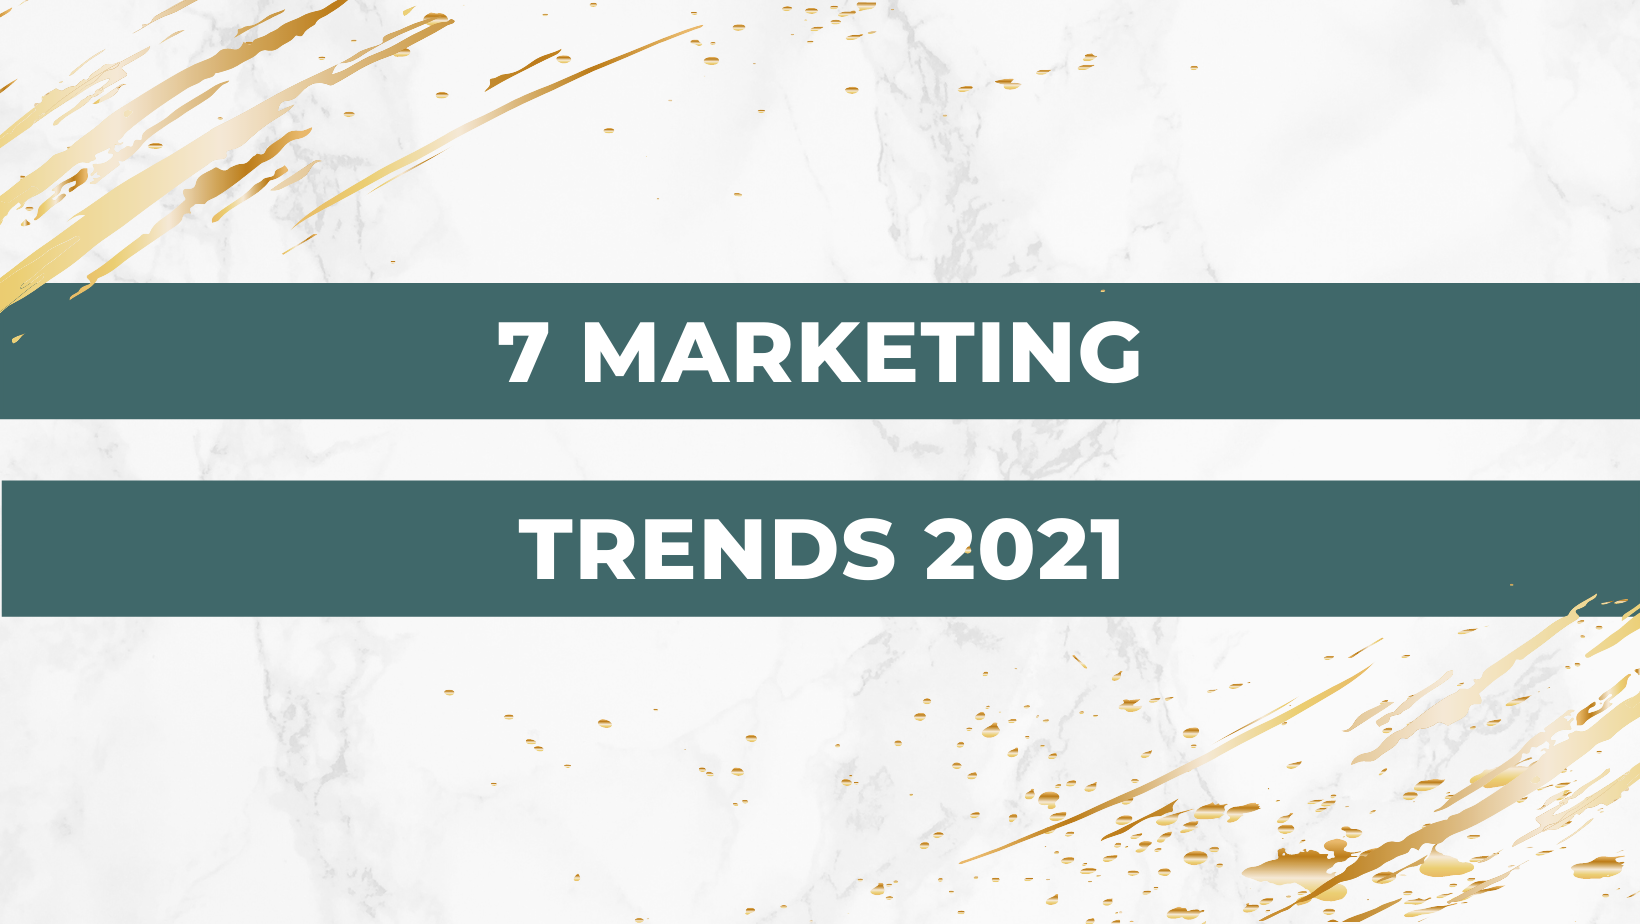 7 Marketing Trends 2021